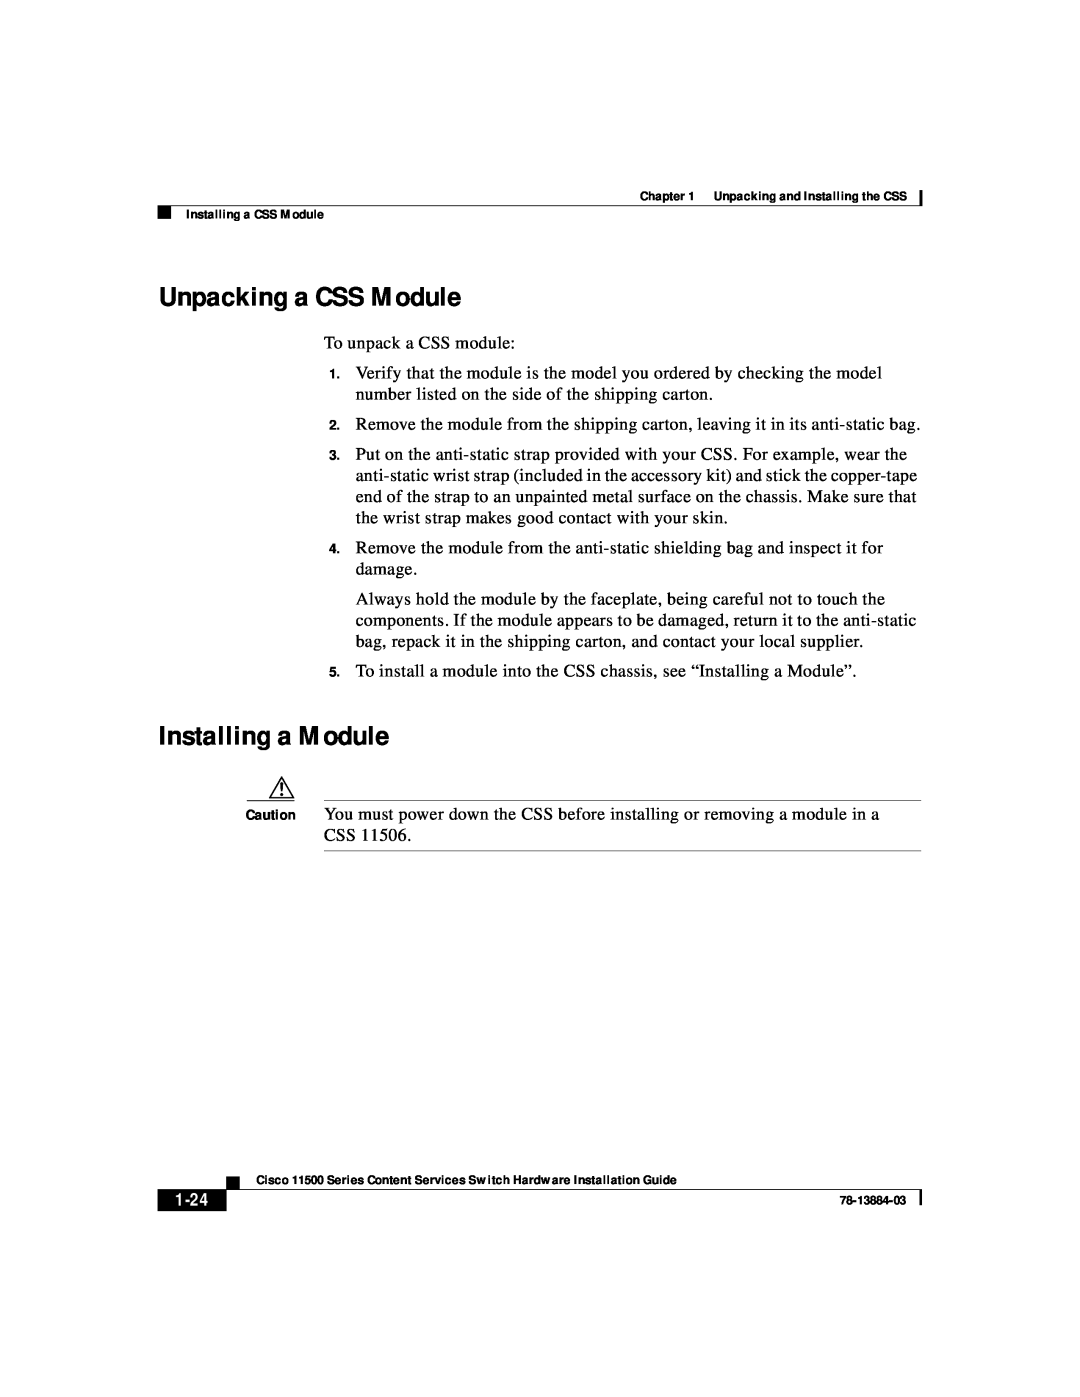 Cisco Systems 11500 Series manual Unpacking a CSS Module, Installing a Module, 1-24 